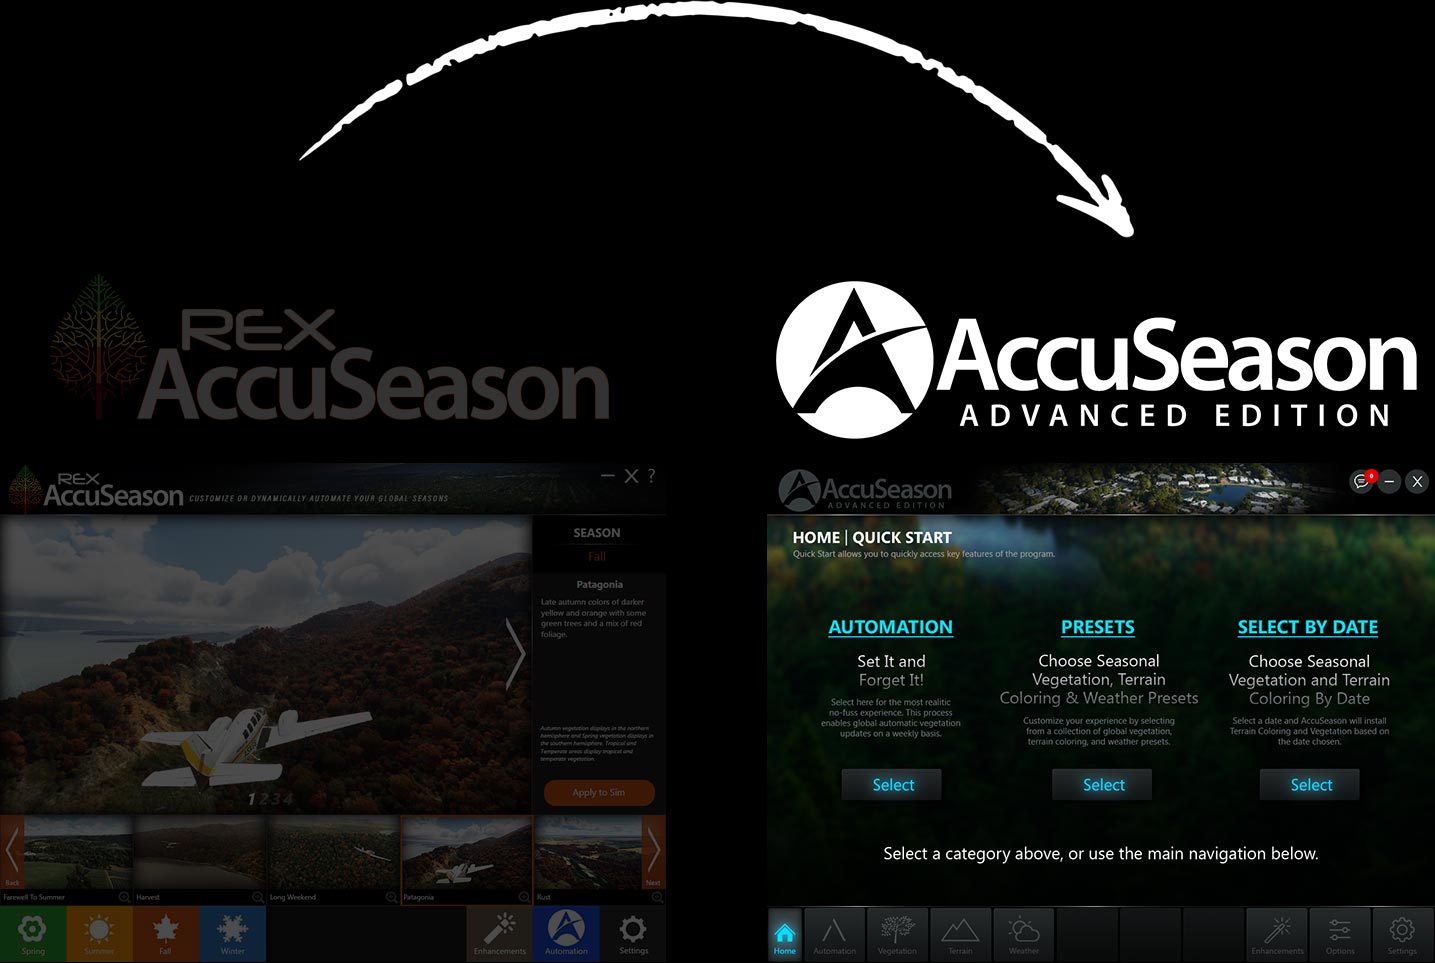 AccuSeason is now AccuSeason Advanced Edition